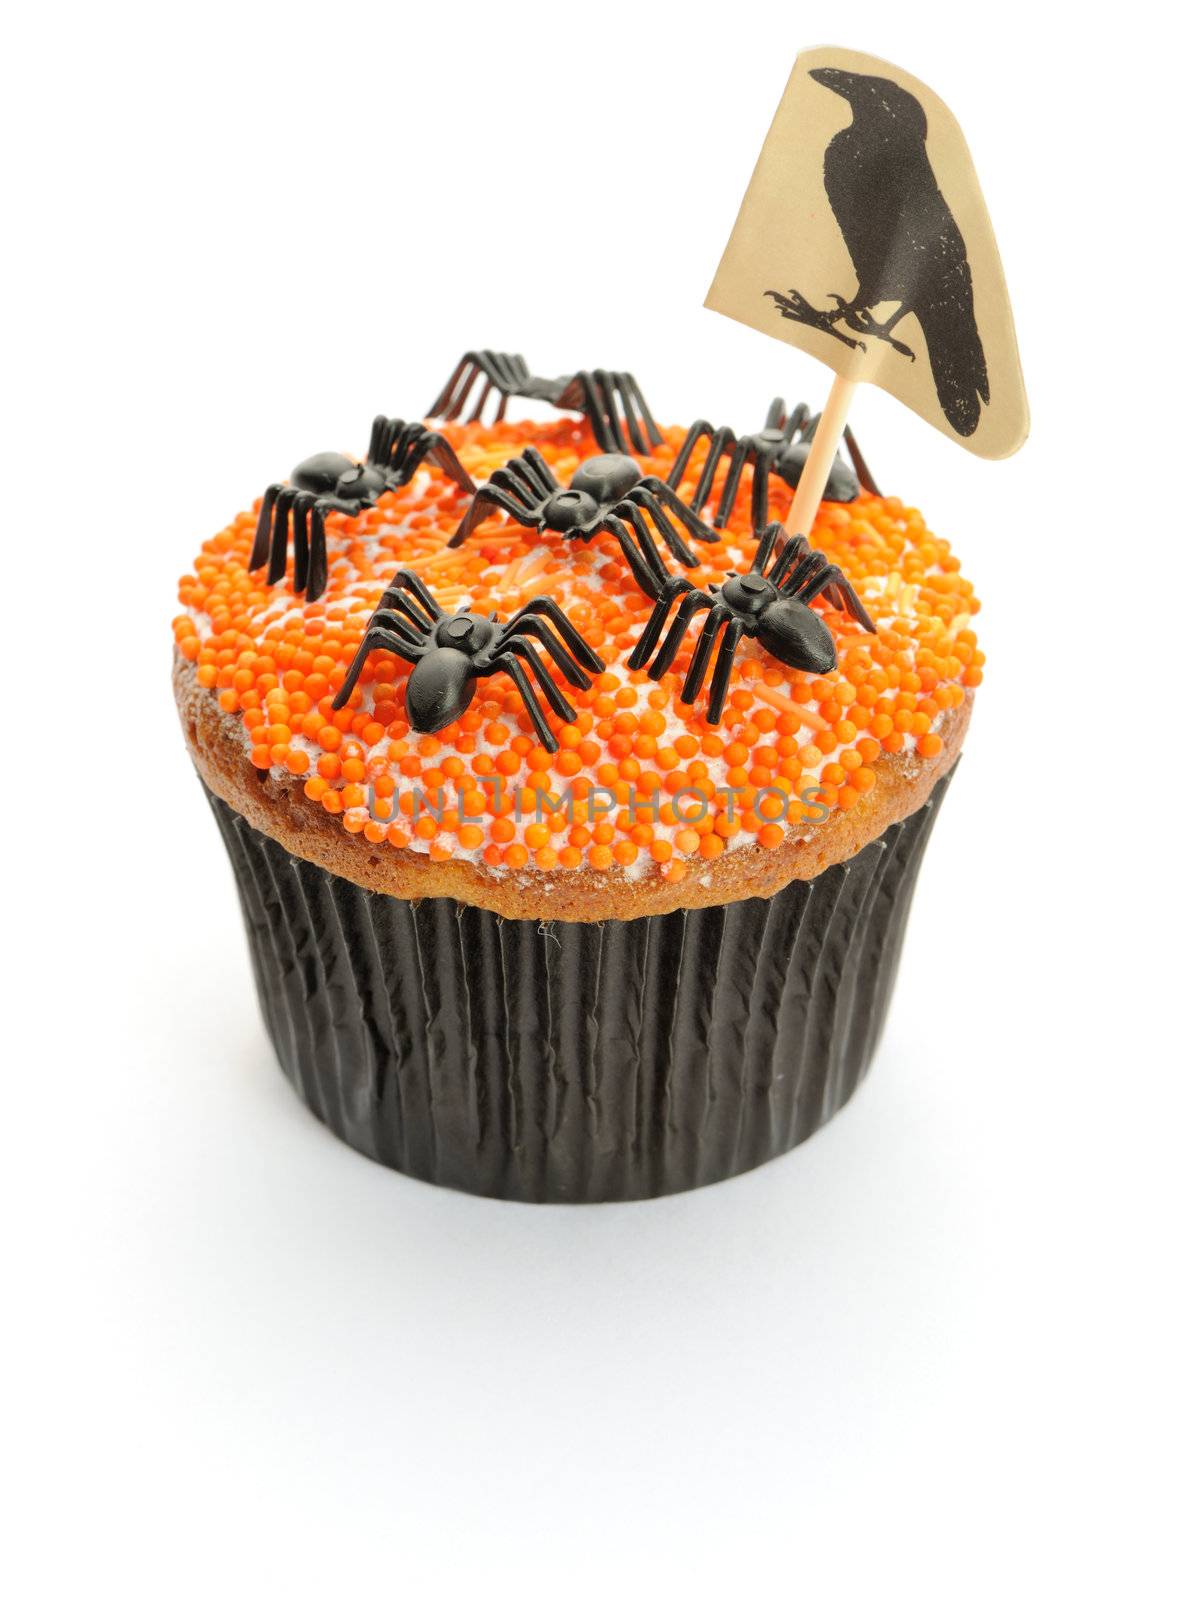 Halloween cupcake by haveseen